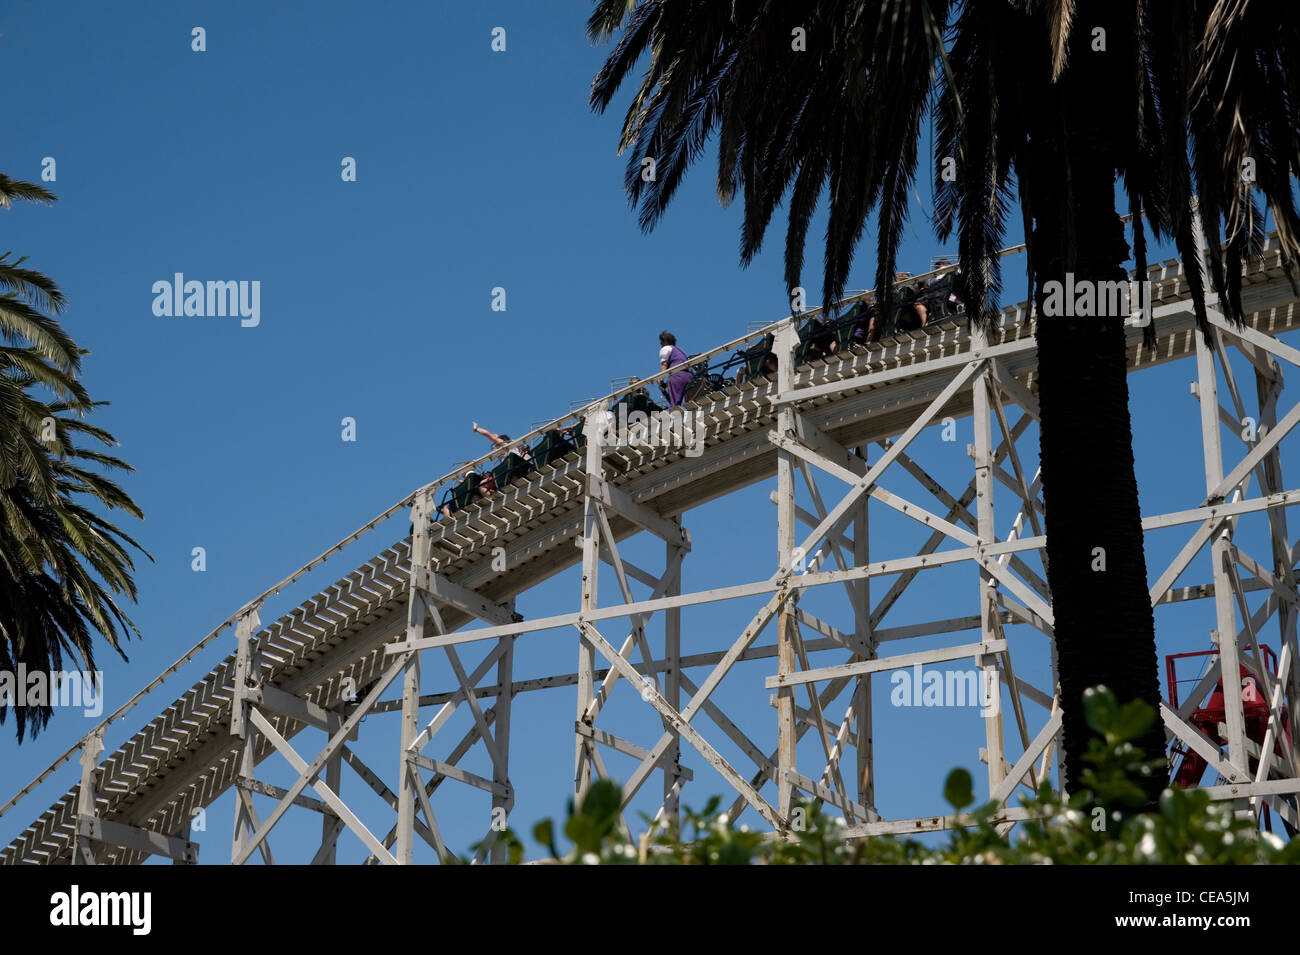 wooden roller coaster St Kilda beach Melbourne Stock Photo